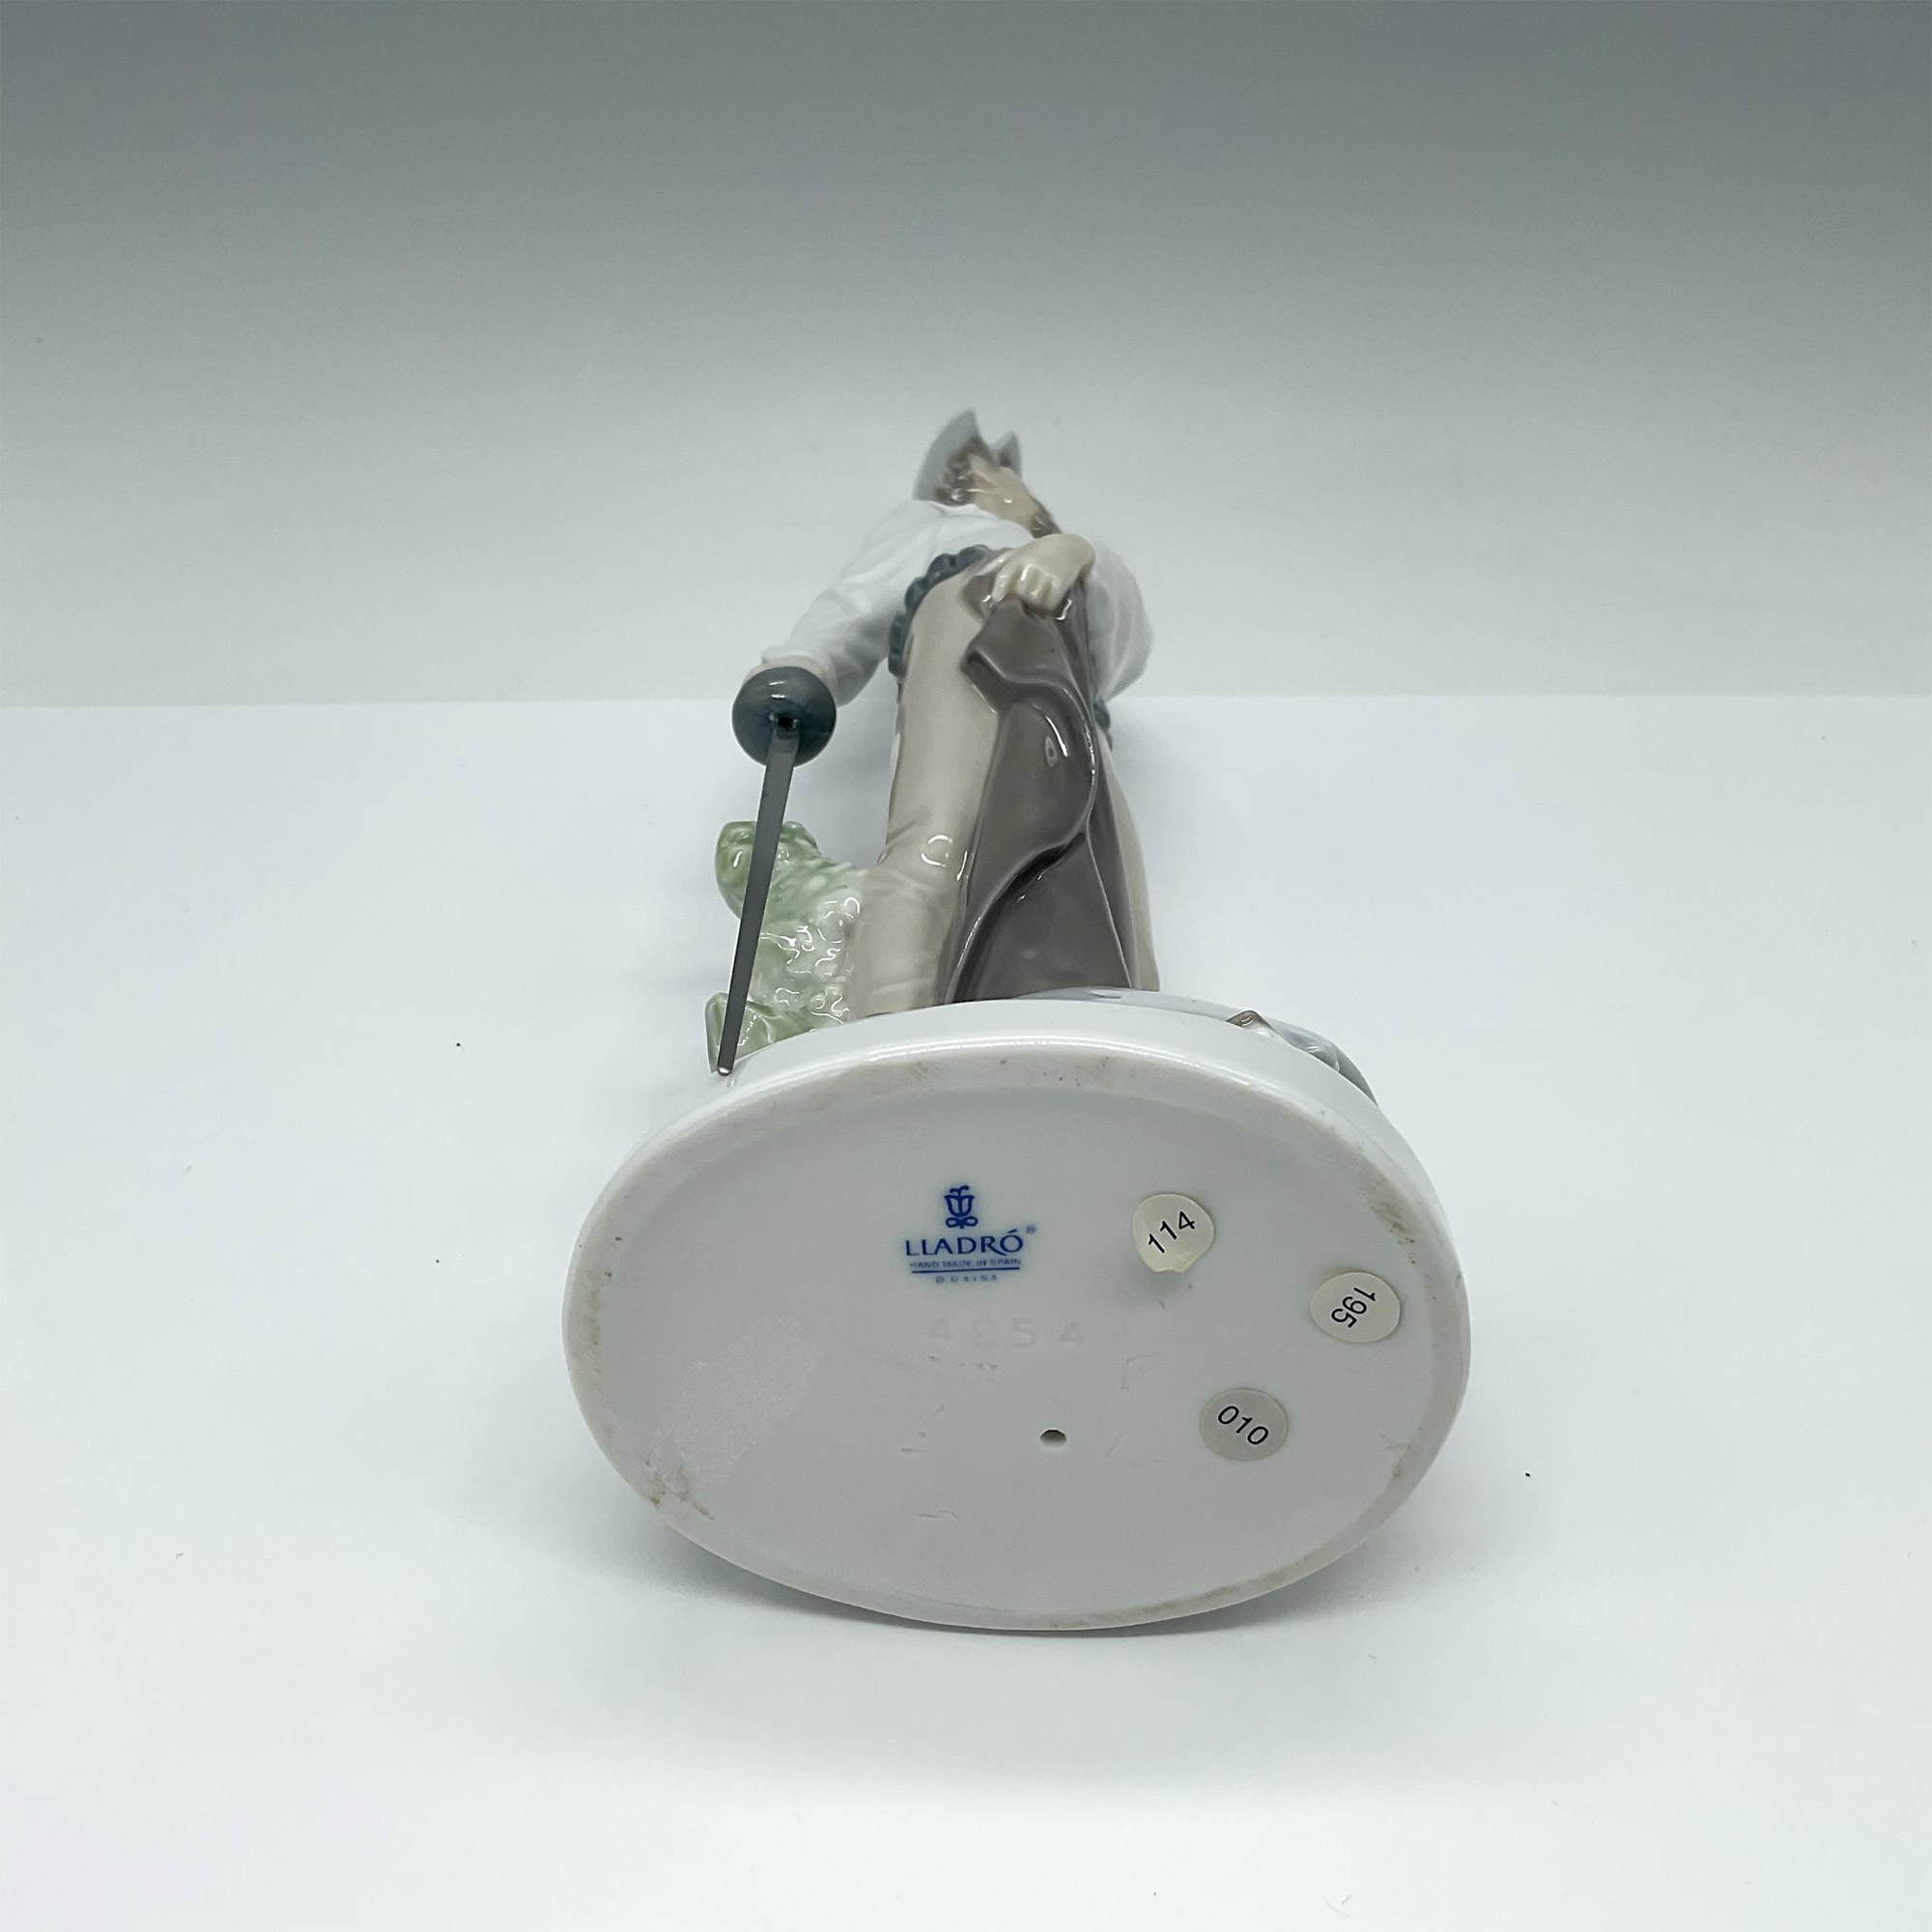 Don Quixote 1002265 - Lladro Porcelain Figurine - Image 3 of 3